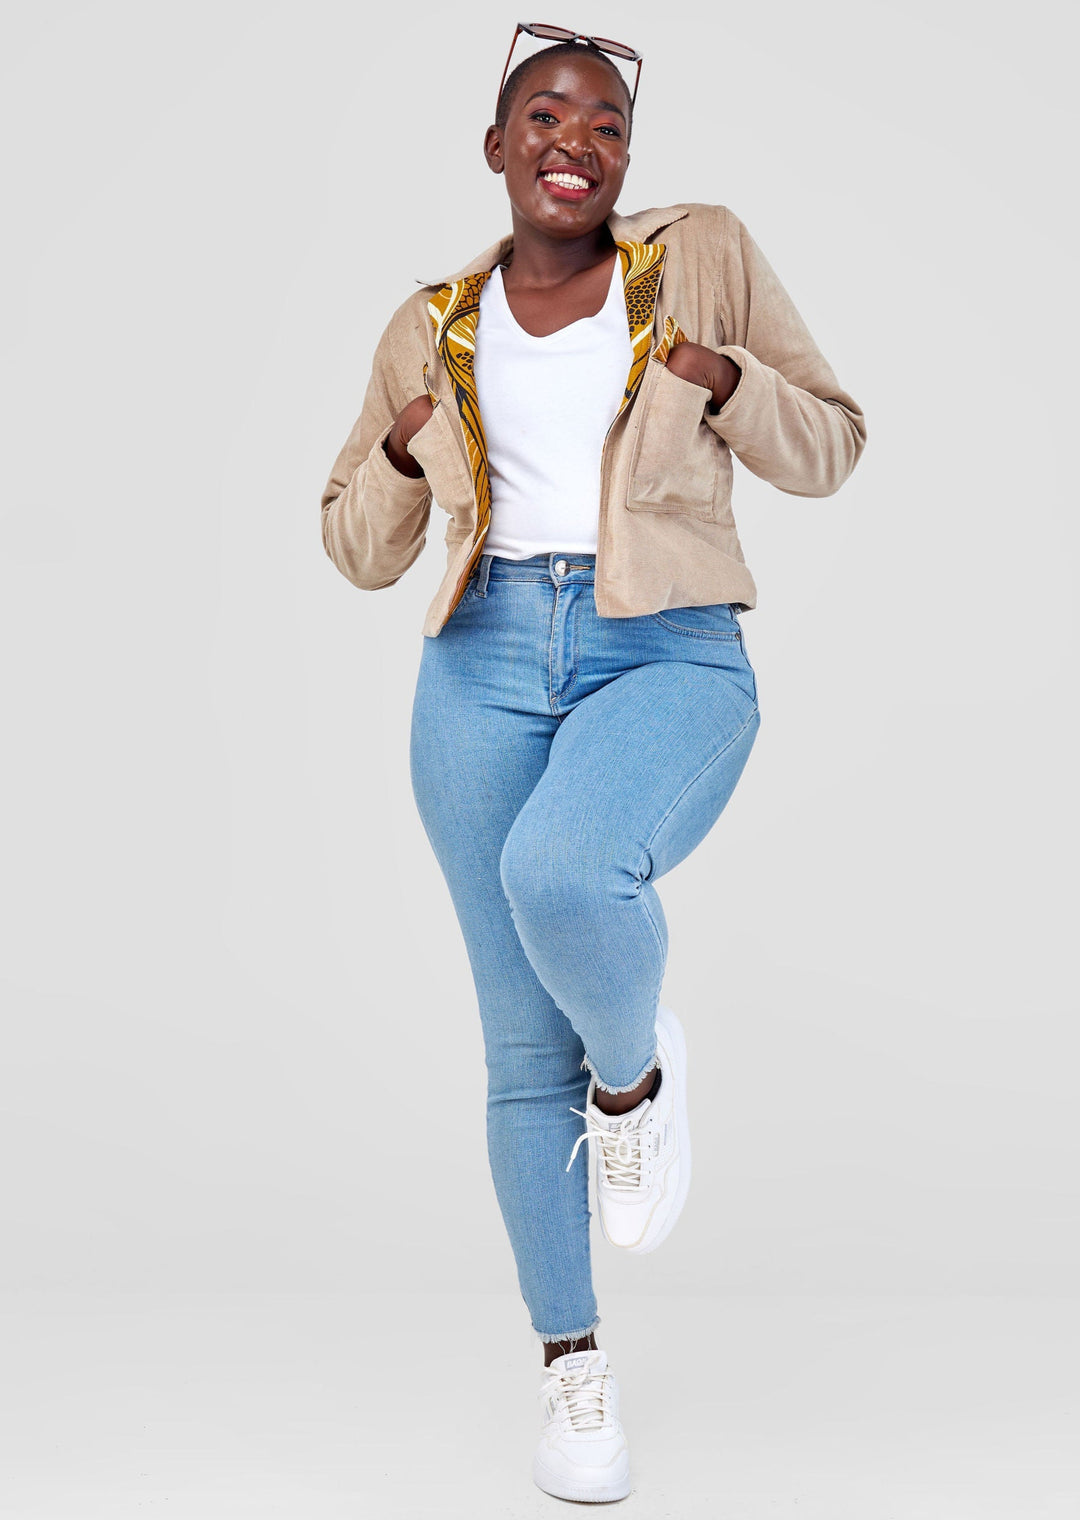 Cropped Jacke aus Cord ‚Chai‘ - mikono.africa Jacken aus Kenia bunte Bomberjacke Partyjacke faire sozial nachhaltig designed in Kenia